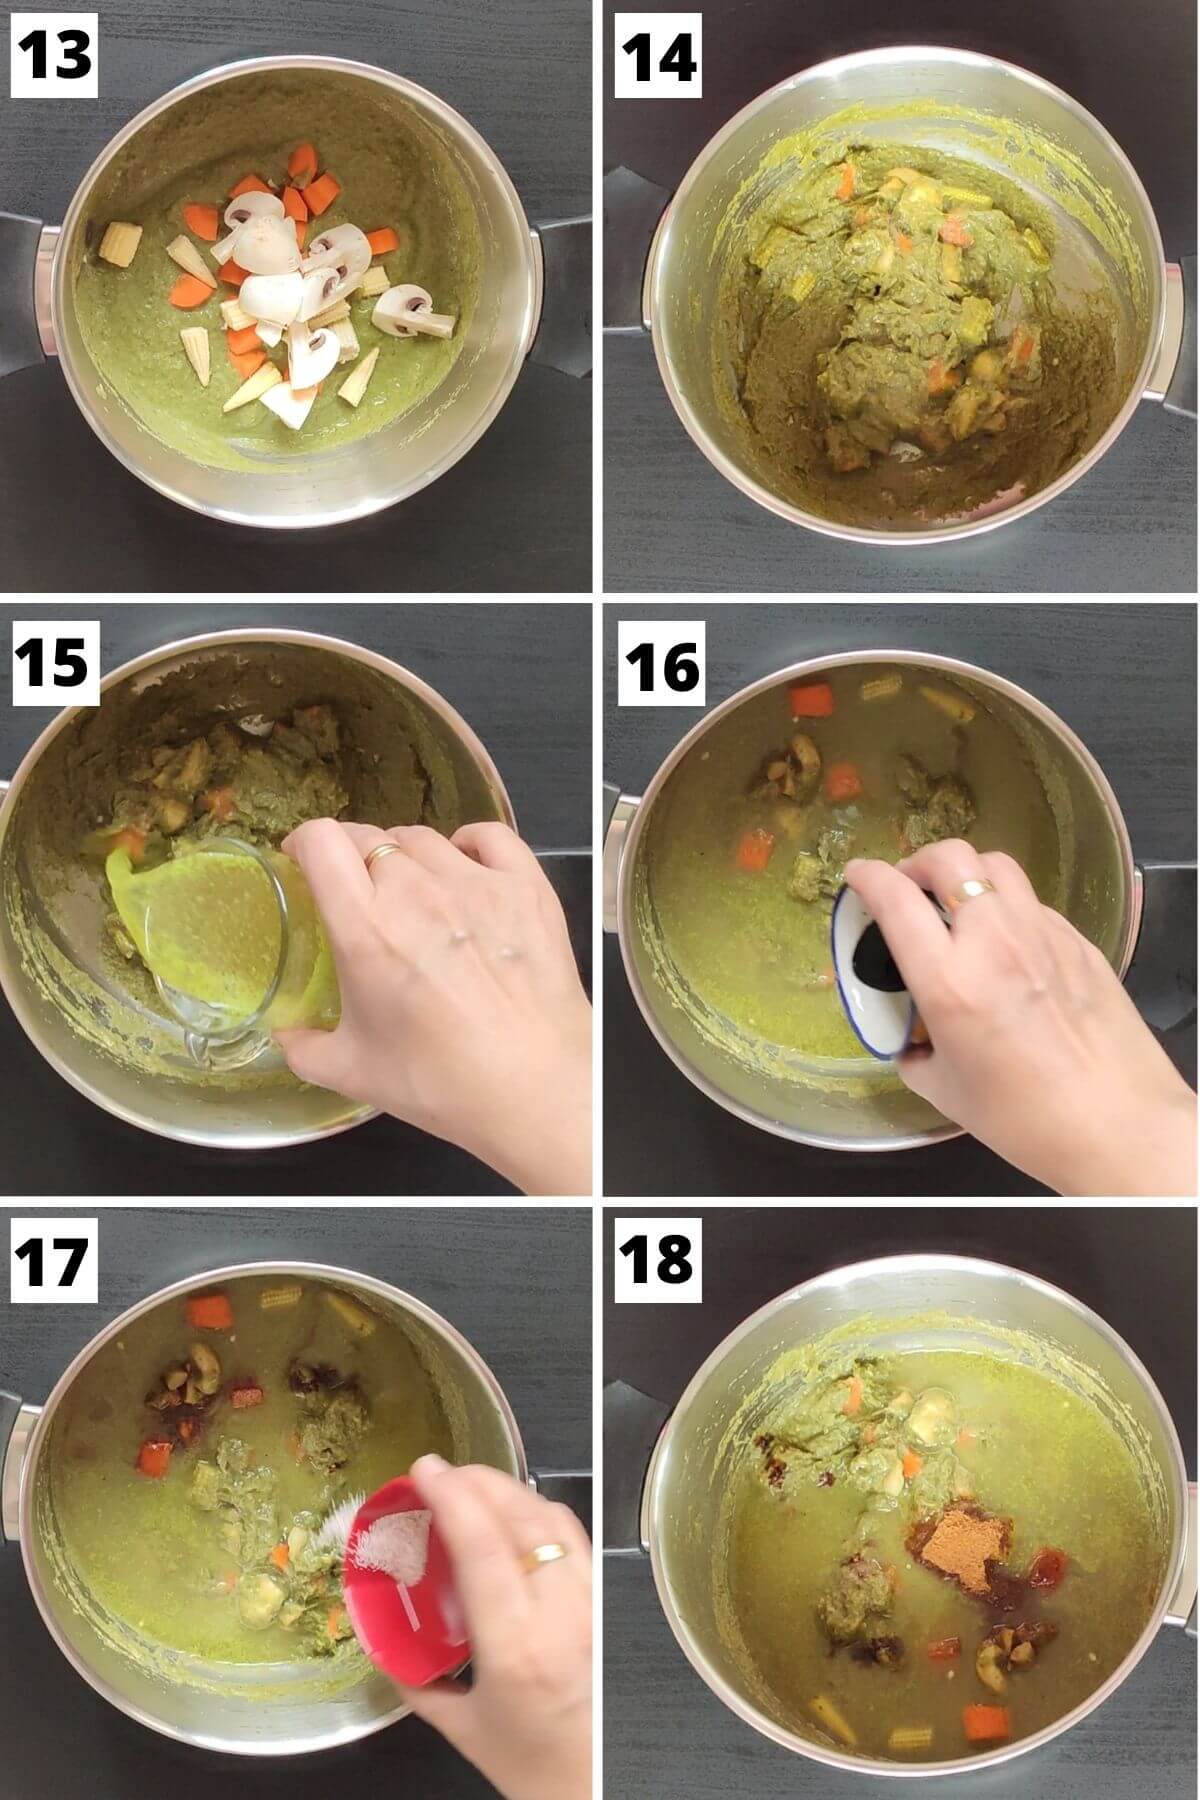 Steps to make vegan Thai green curry